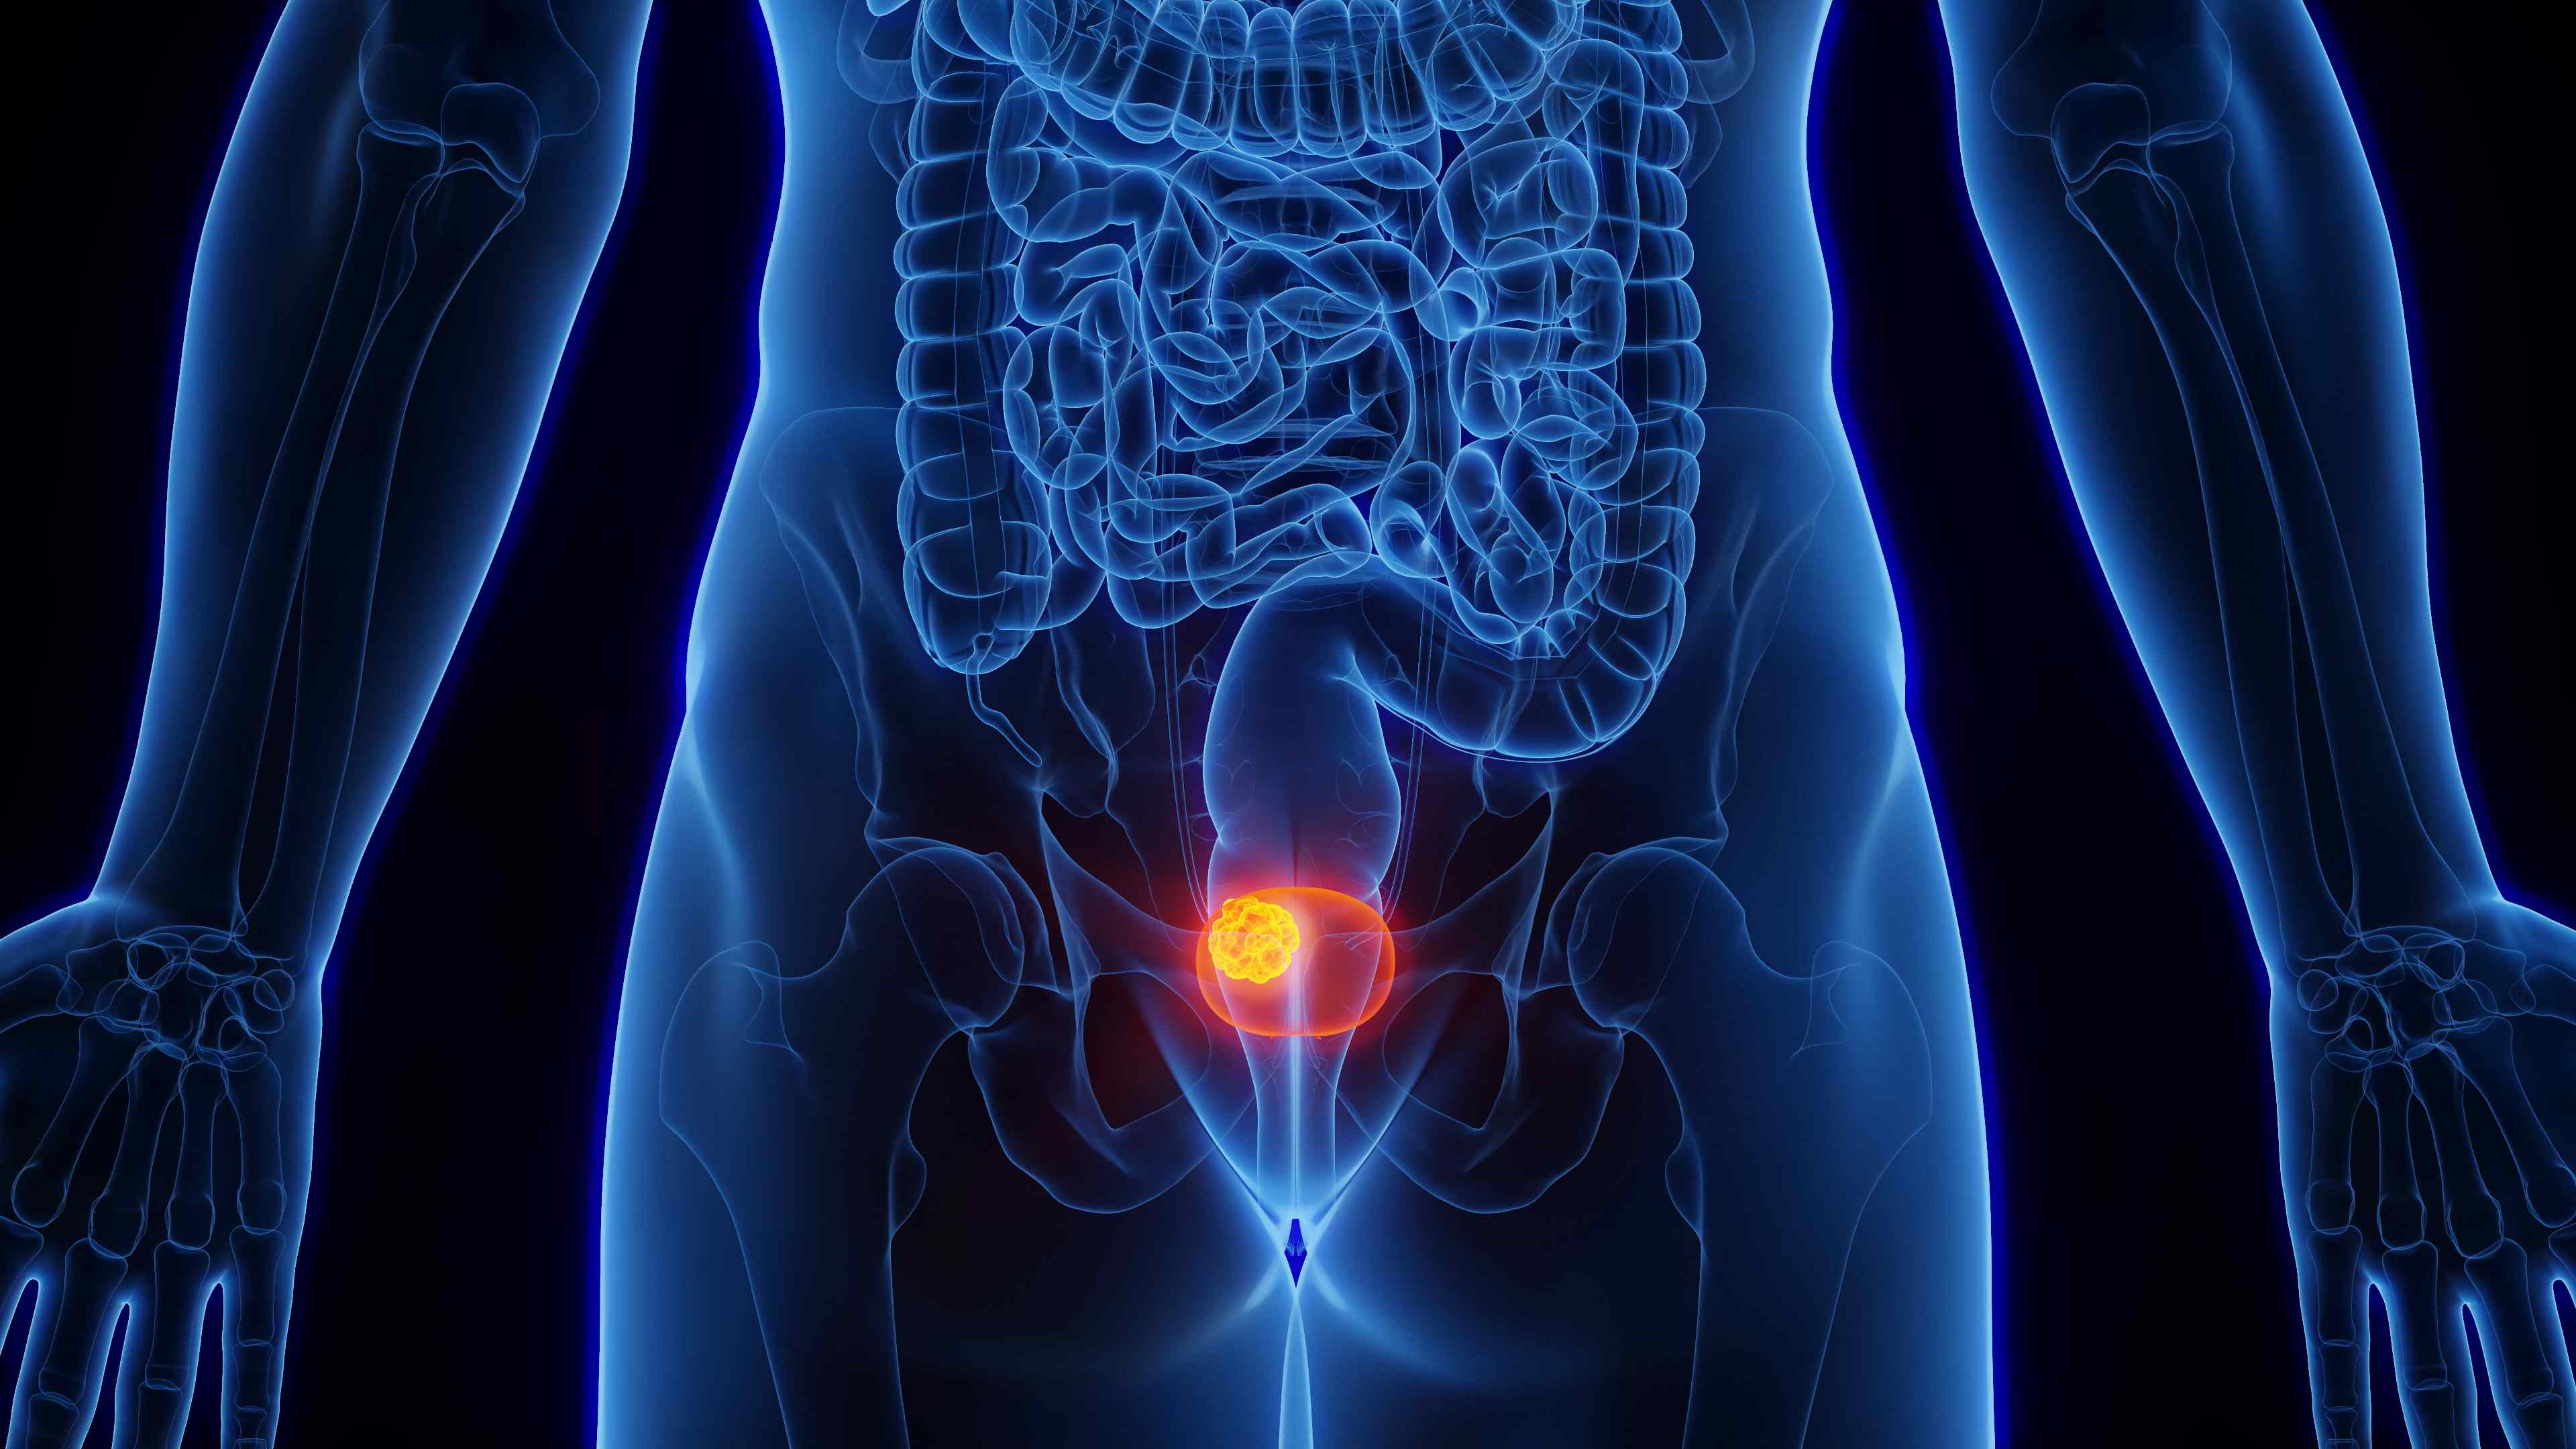 Le cancer de la vessie touche principalement les hommes. © Sebastian Kaulitzki, Adobe stock